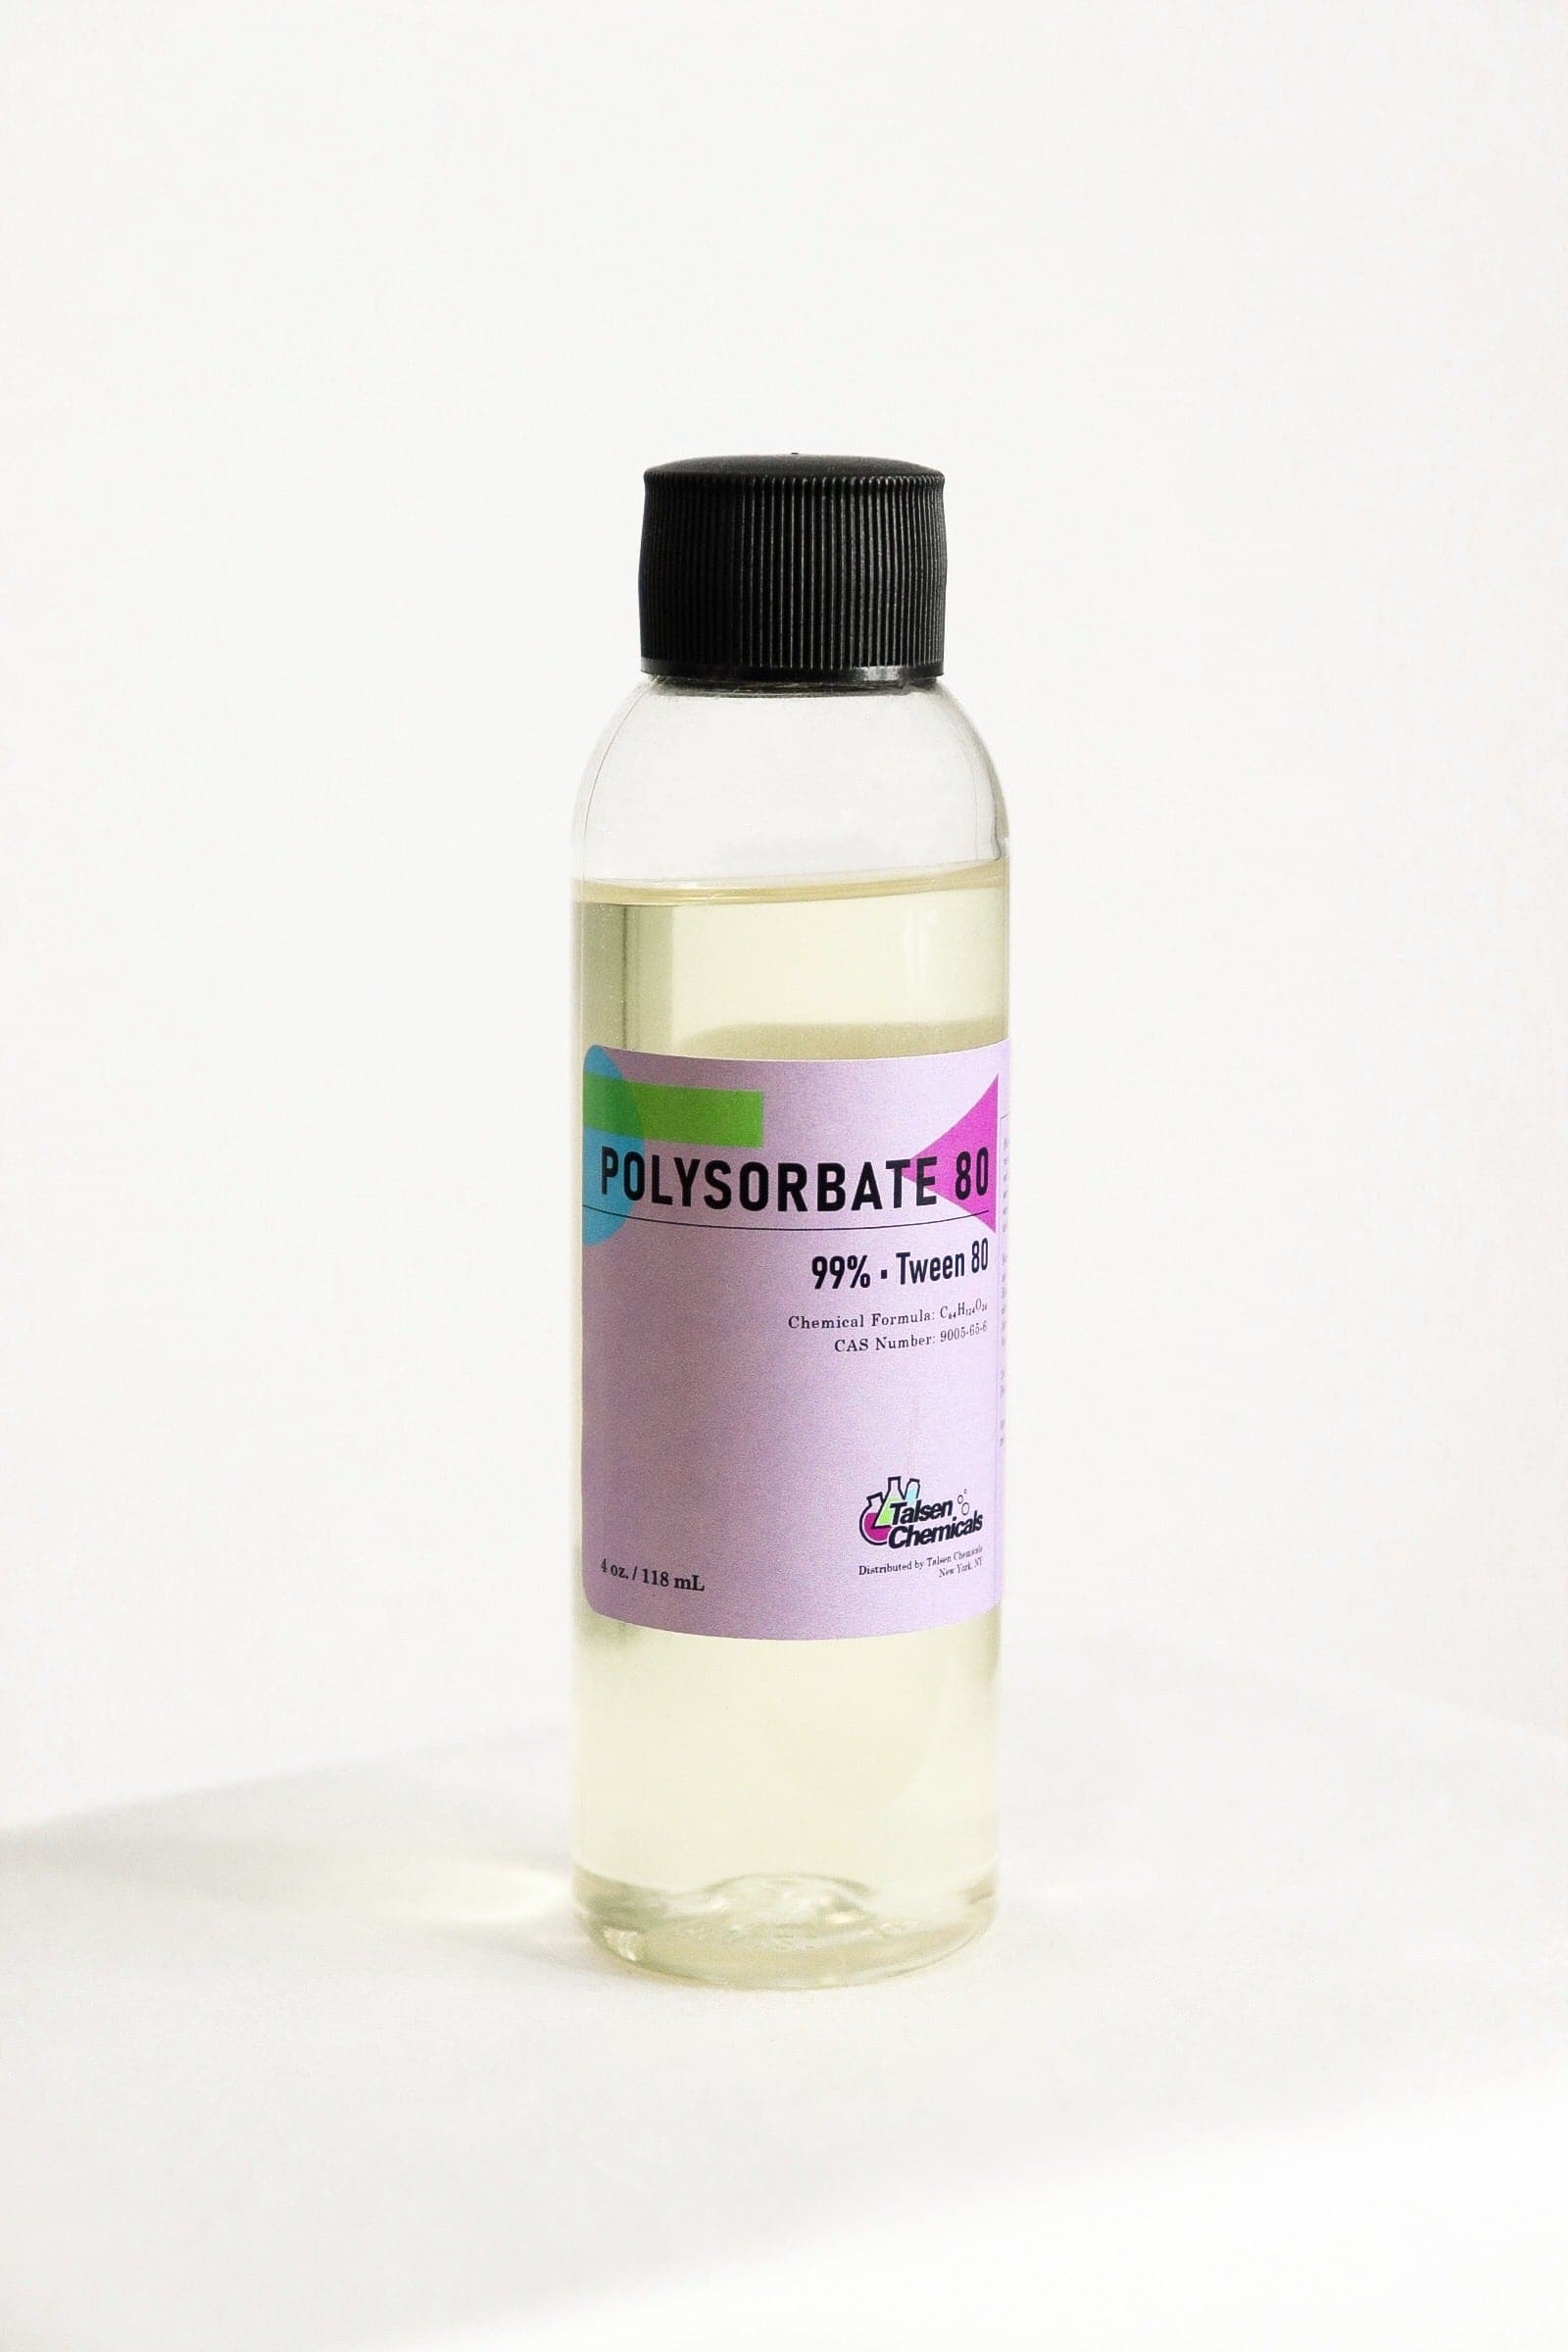 Talsen Chemicals Optiphen Preservative (1 oz / 30 ml) Optiphen Natural Preservative for Cosmetics Water Soluble Paraben Free Broad Spectrum Preservati